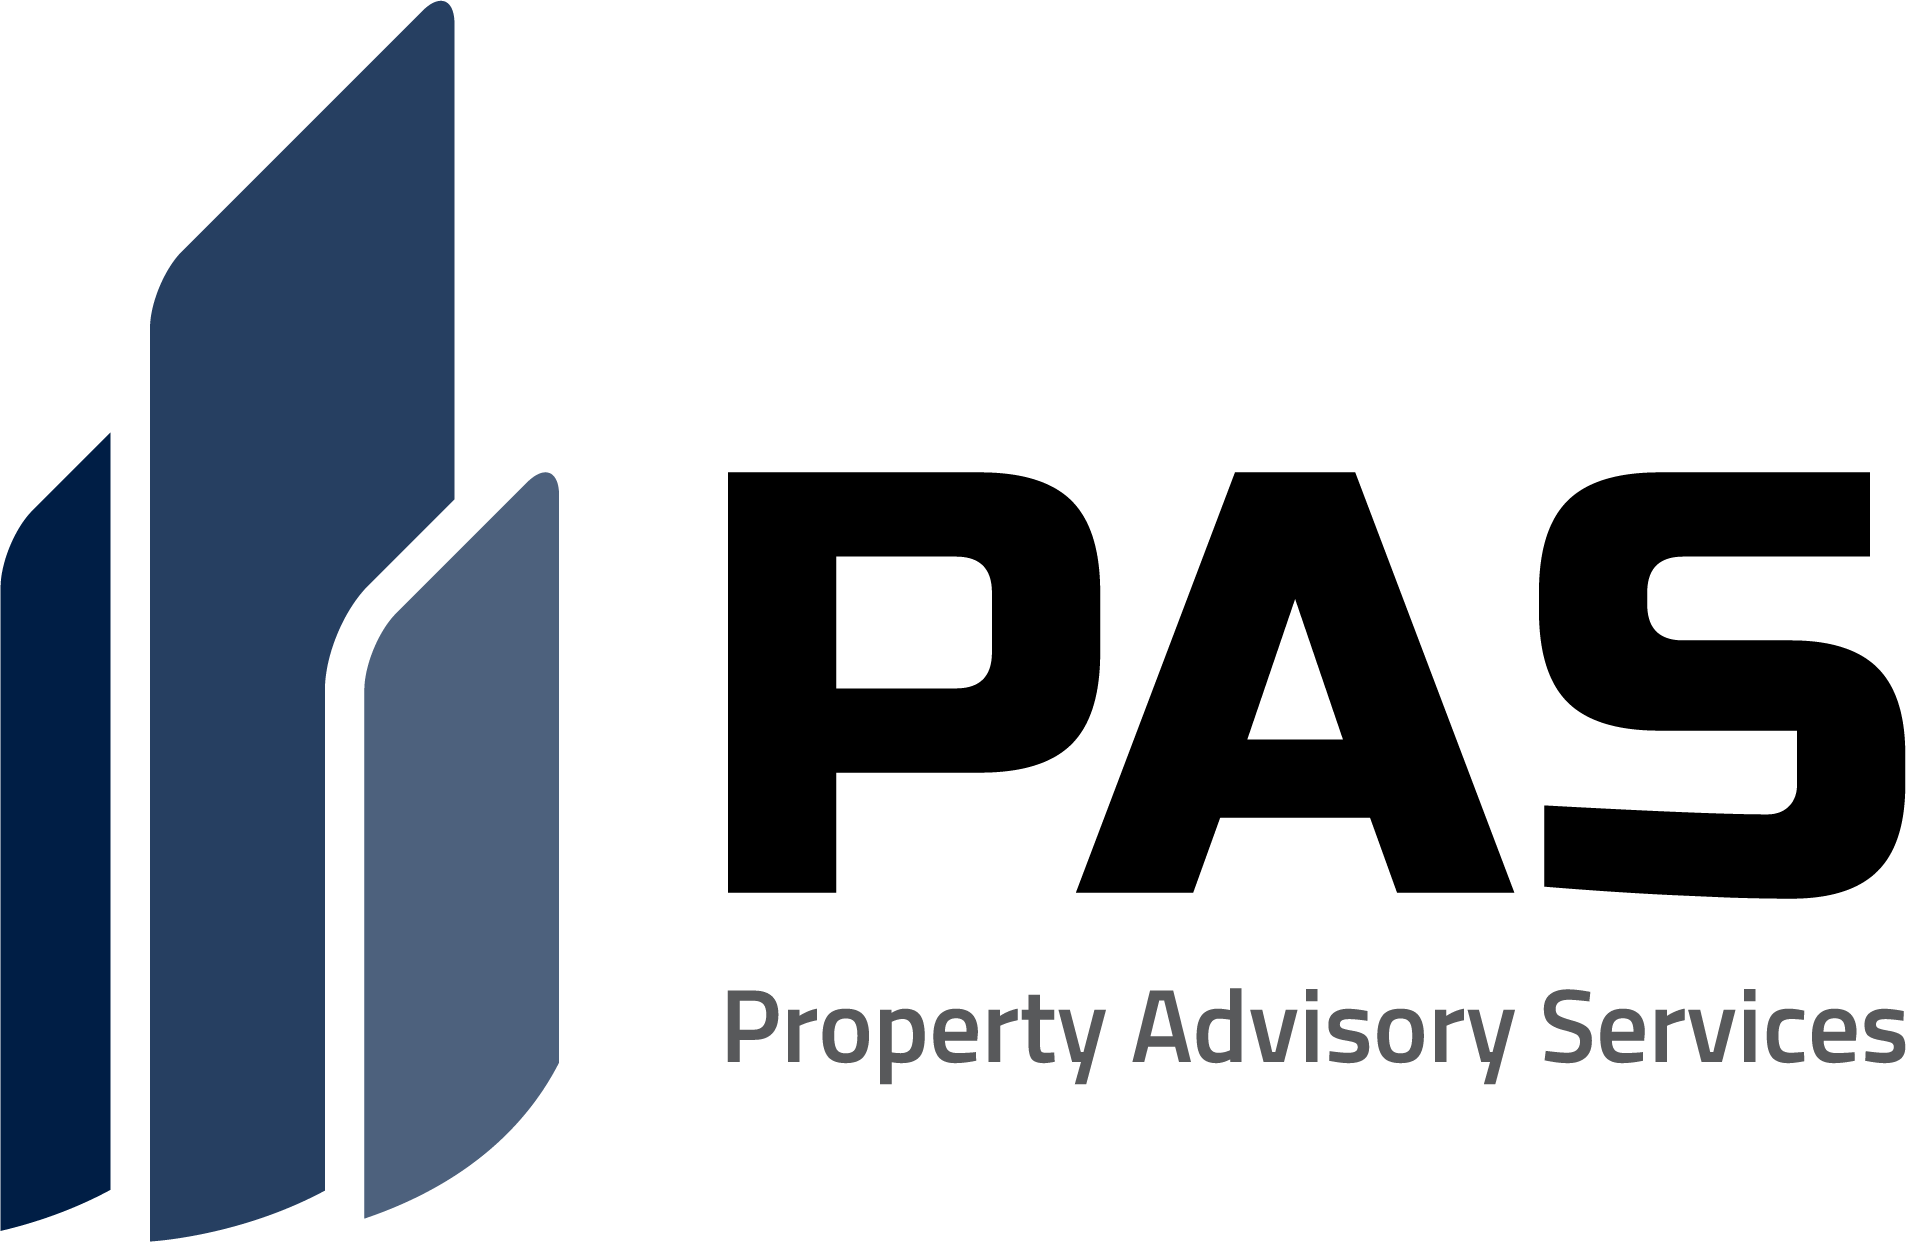 Property Advisory Services